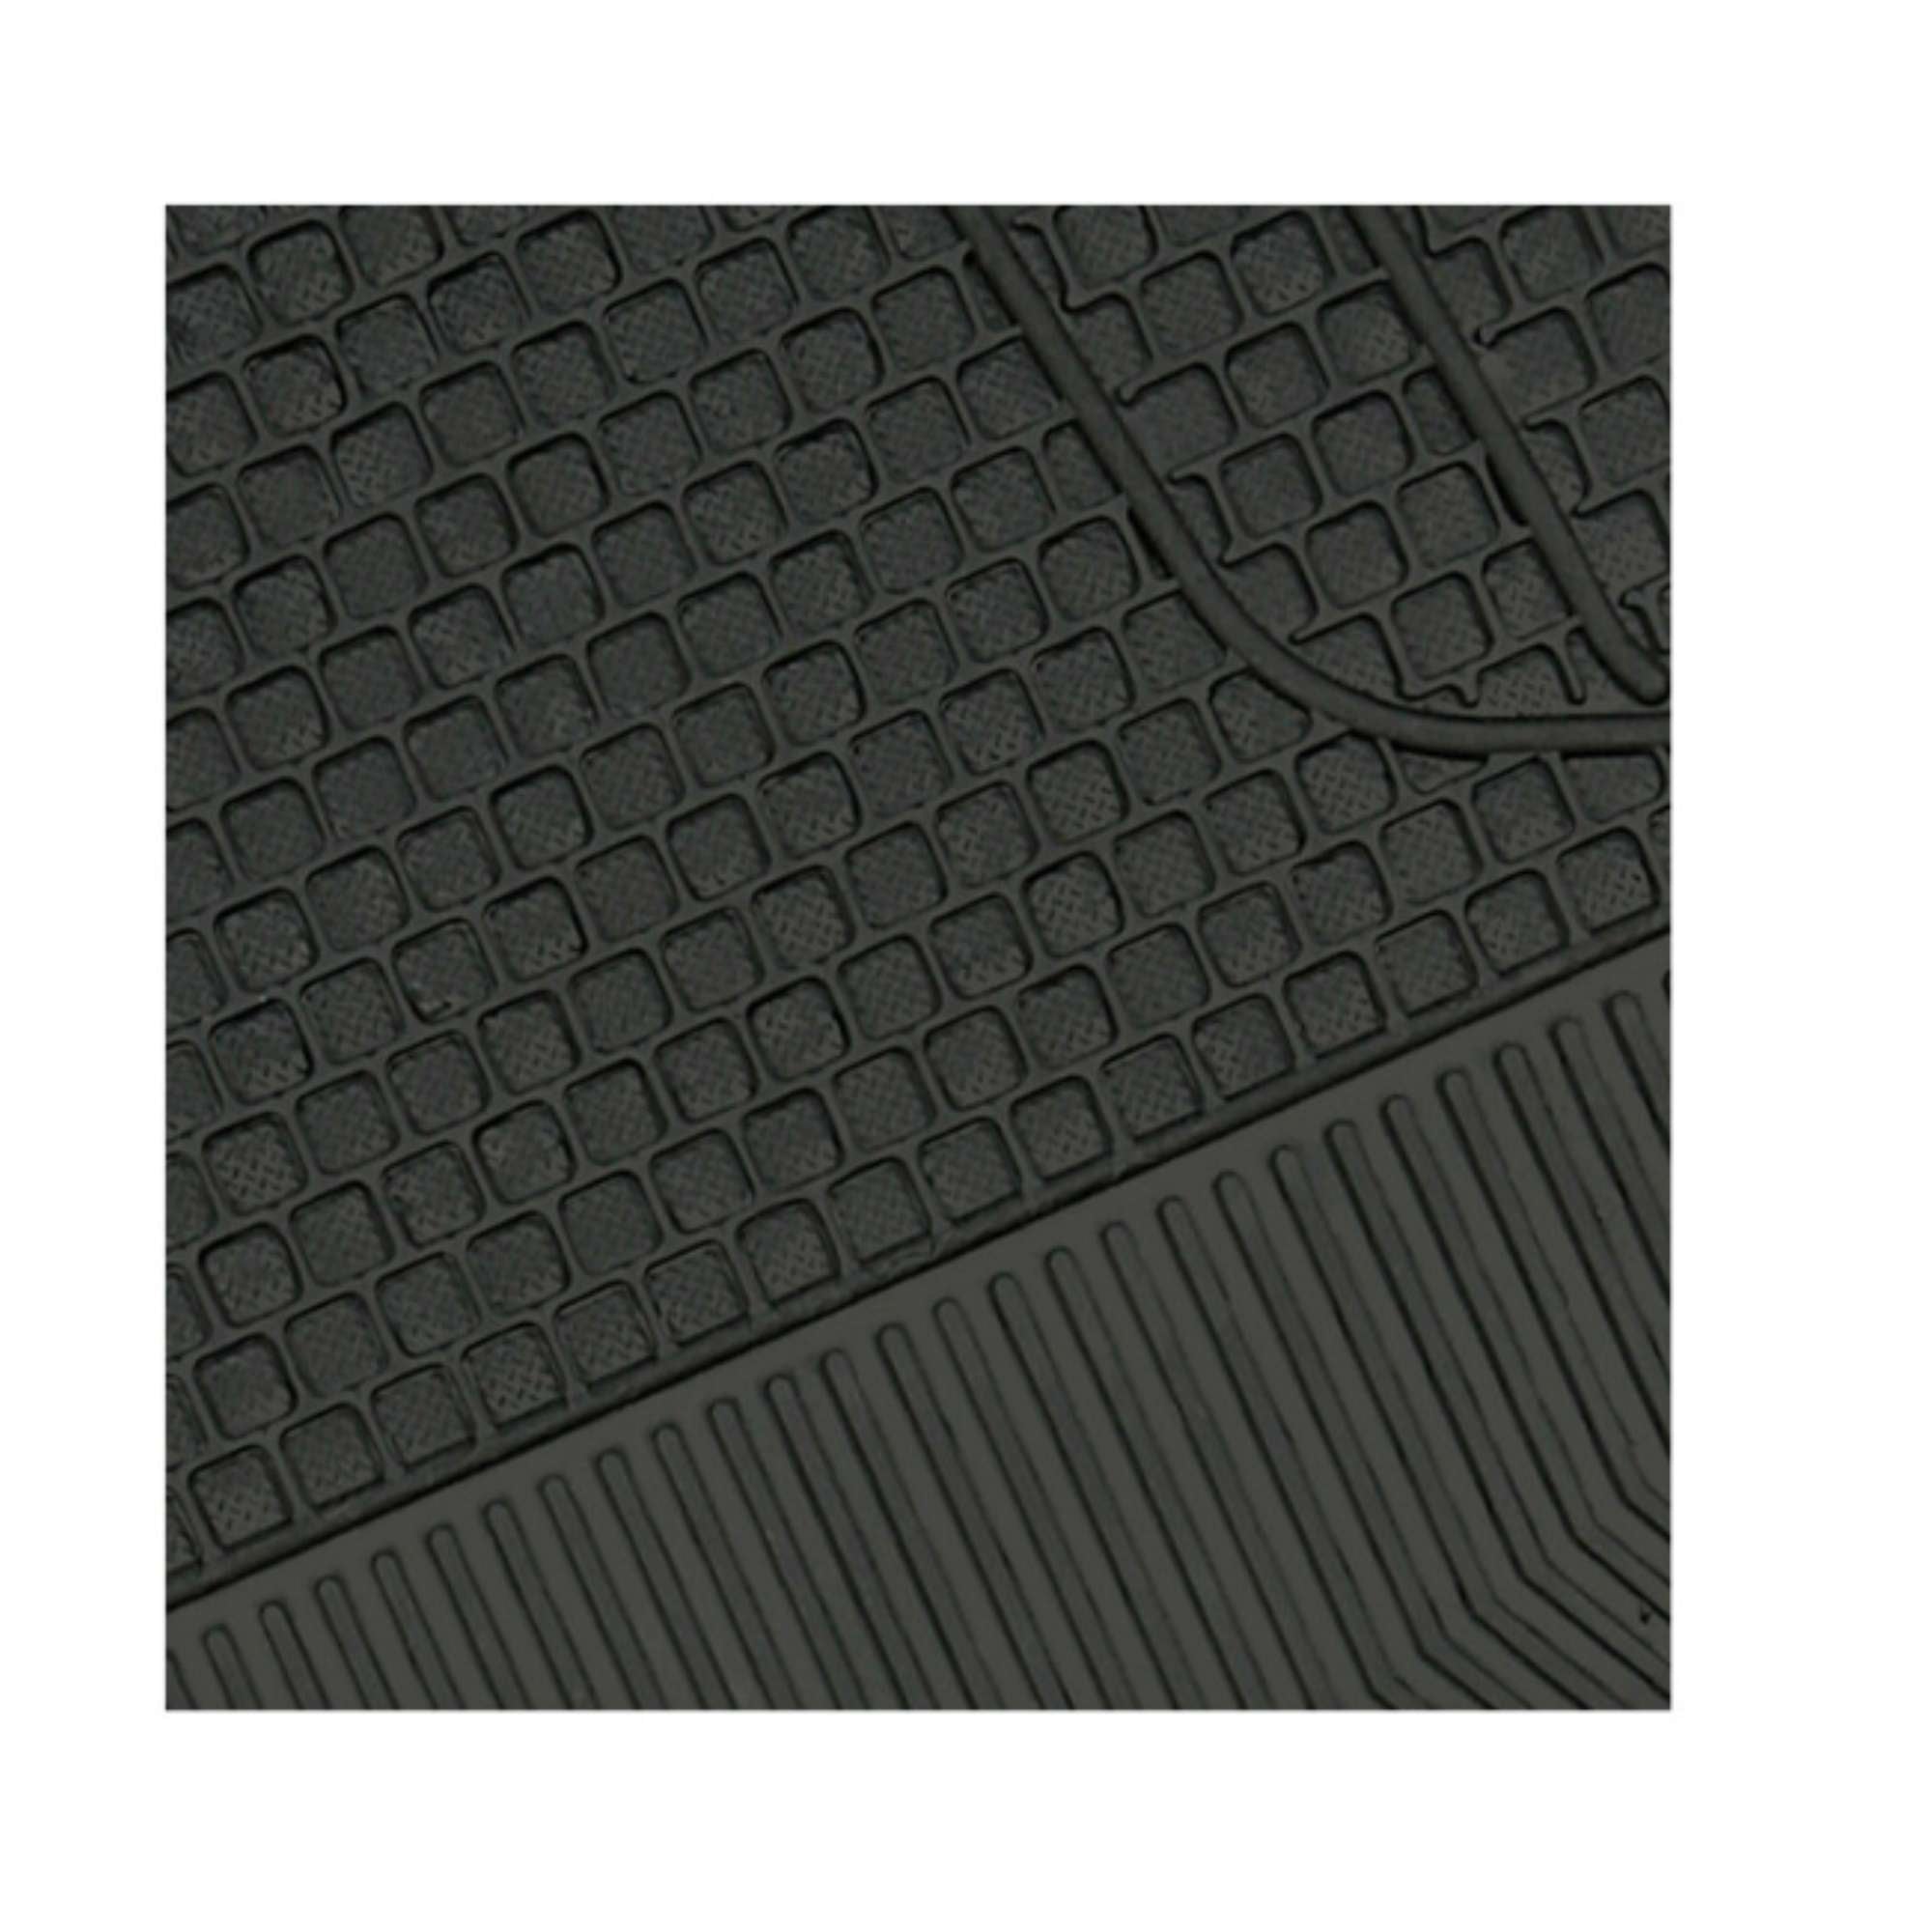 Maxi-Mat, serie tappeti universali in pvc 3 pezzi 48x73 + 141x41 cm - Lampa